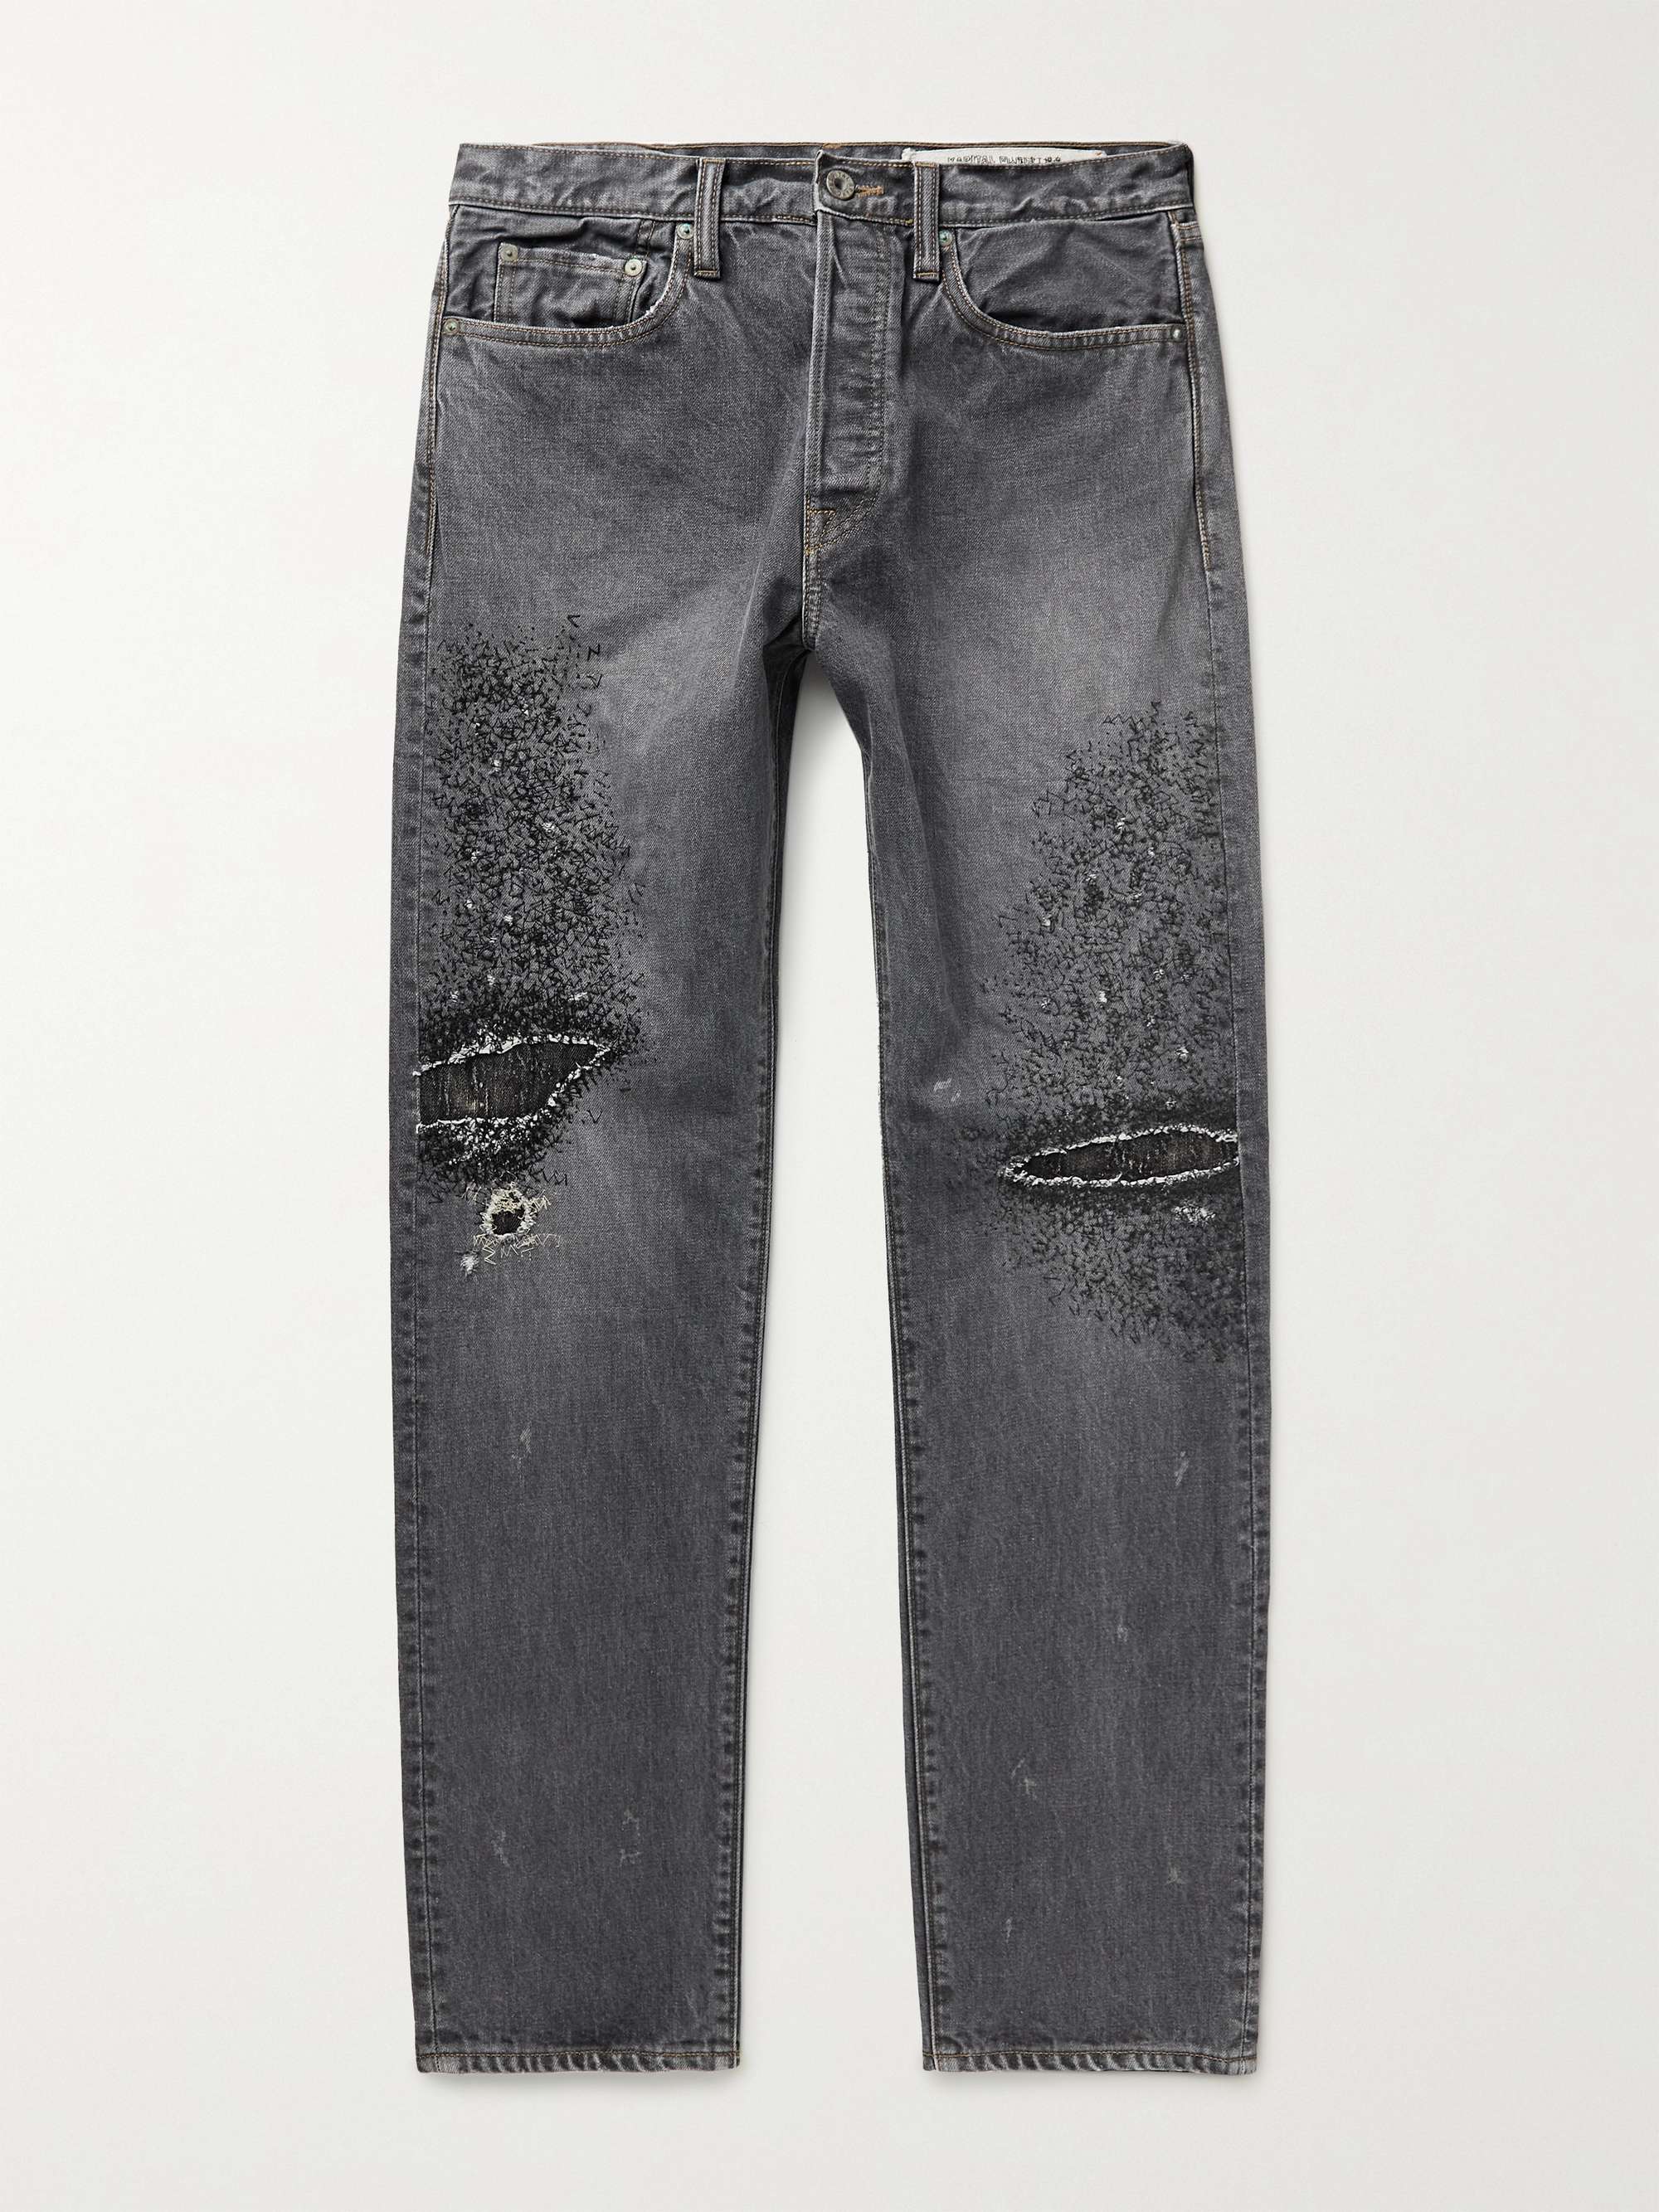 KAPITAL Monkey CISCO Distressed Denim Jeans | MR PORTER